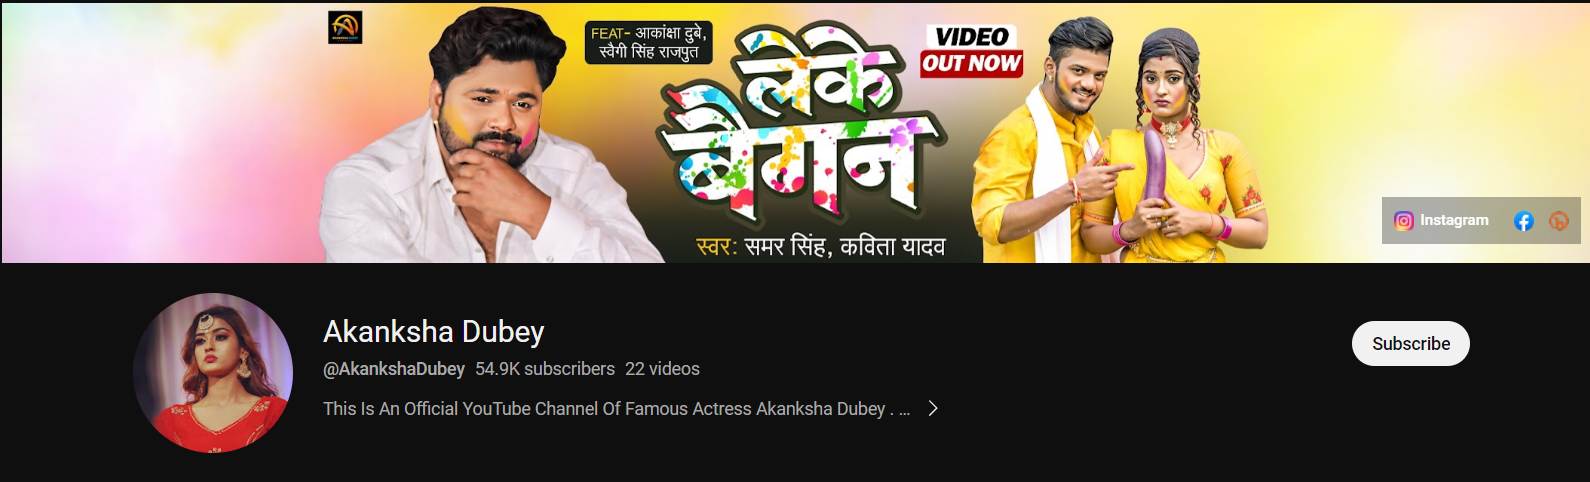 Akanksha Dubey's YouTube Channel